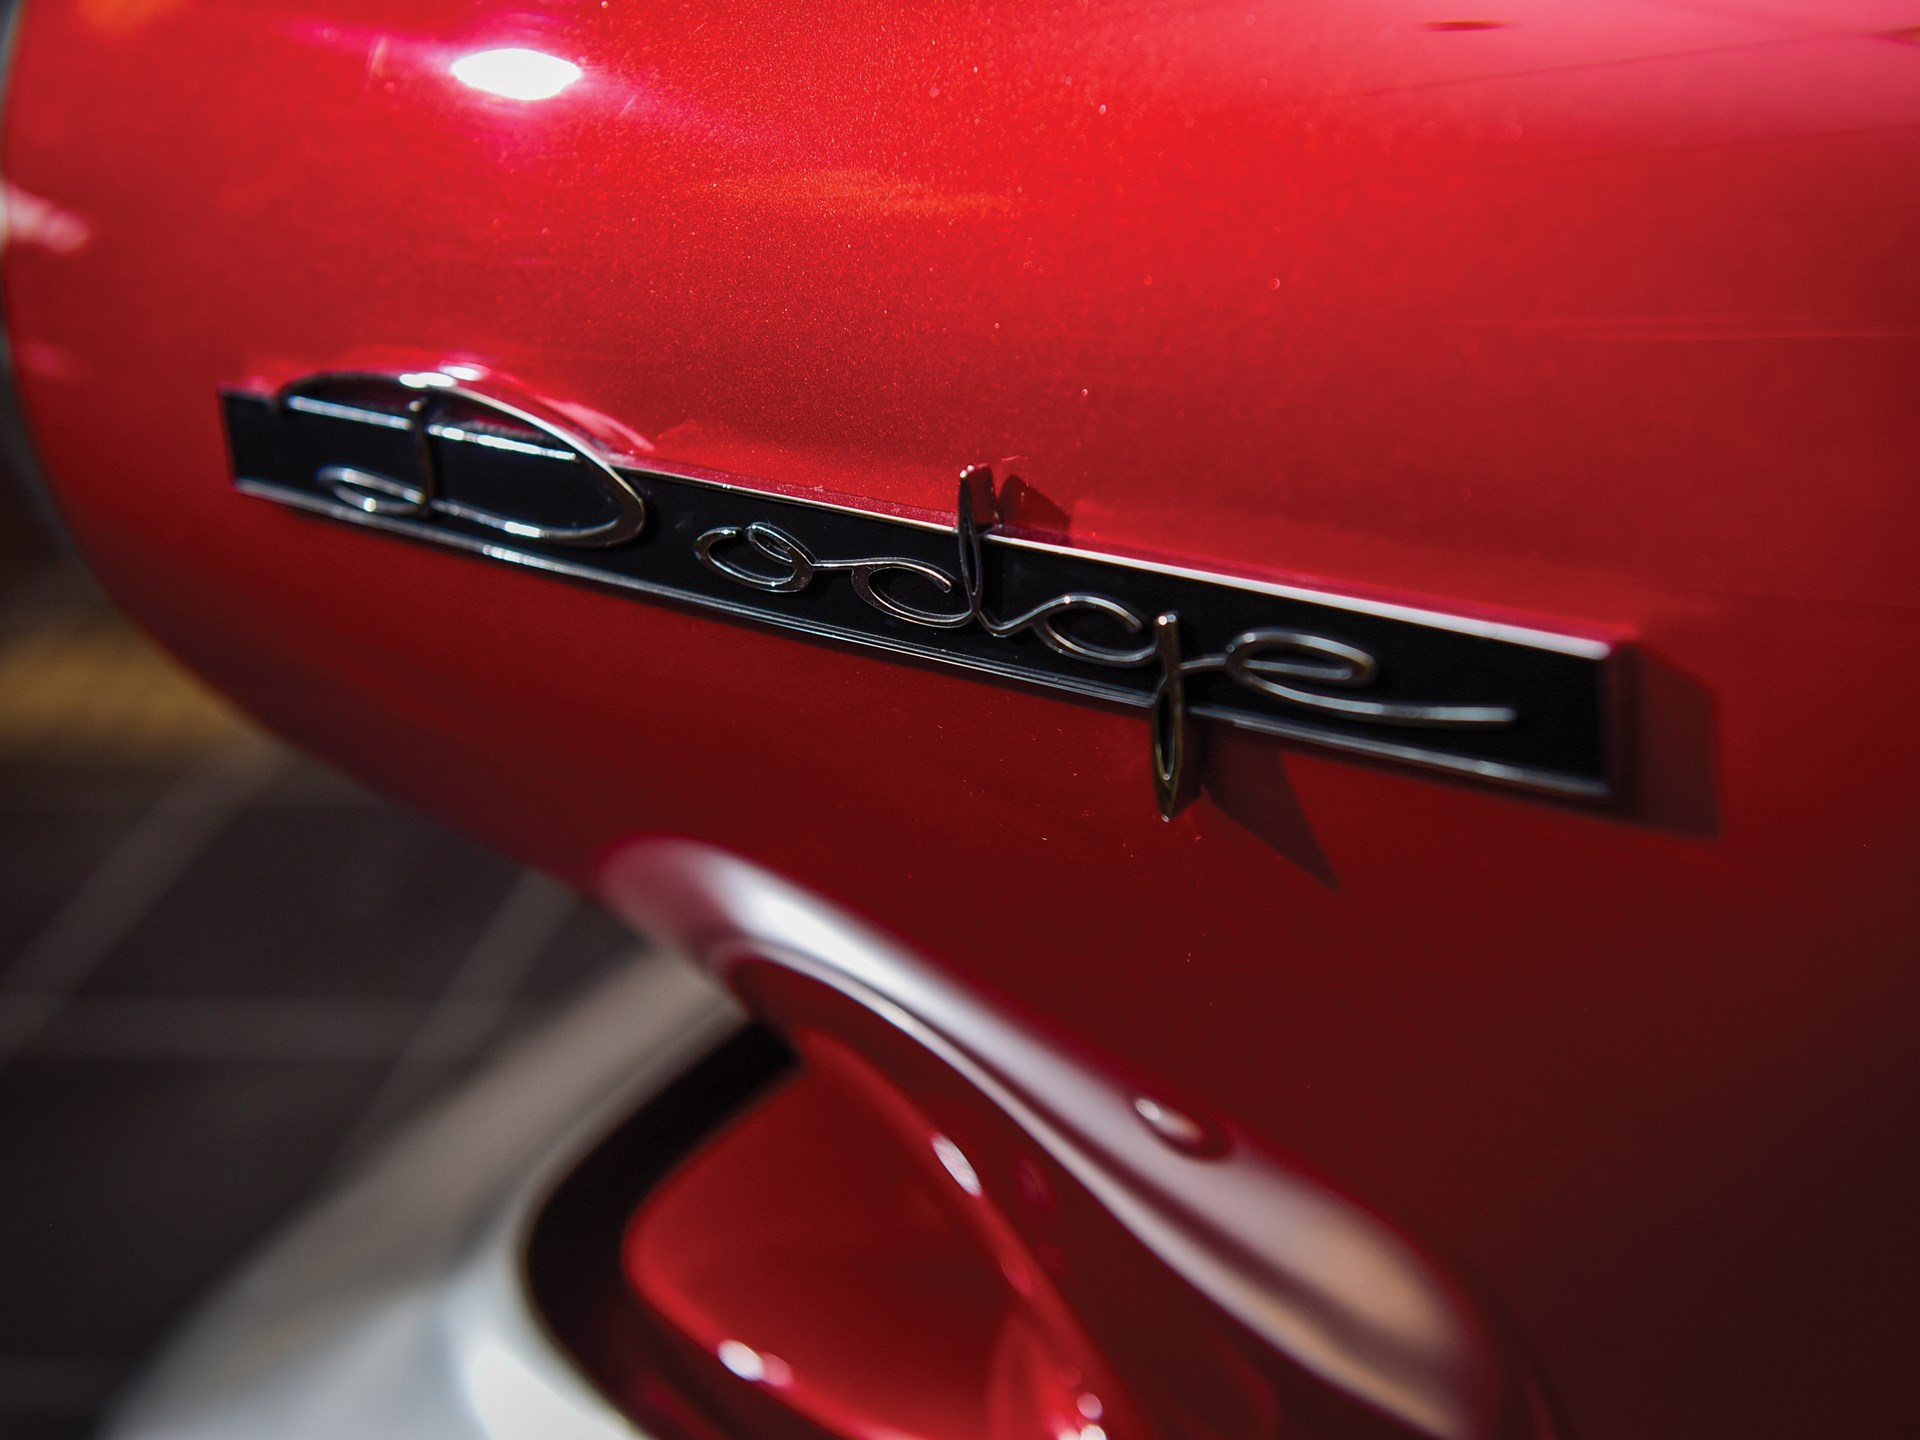 1963 Dodge 330 Max Wedge Lightweight | Arizona 2017 | RM Sotheby's